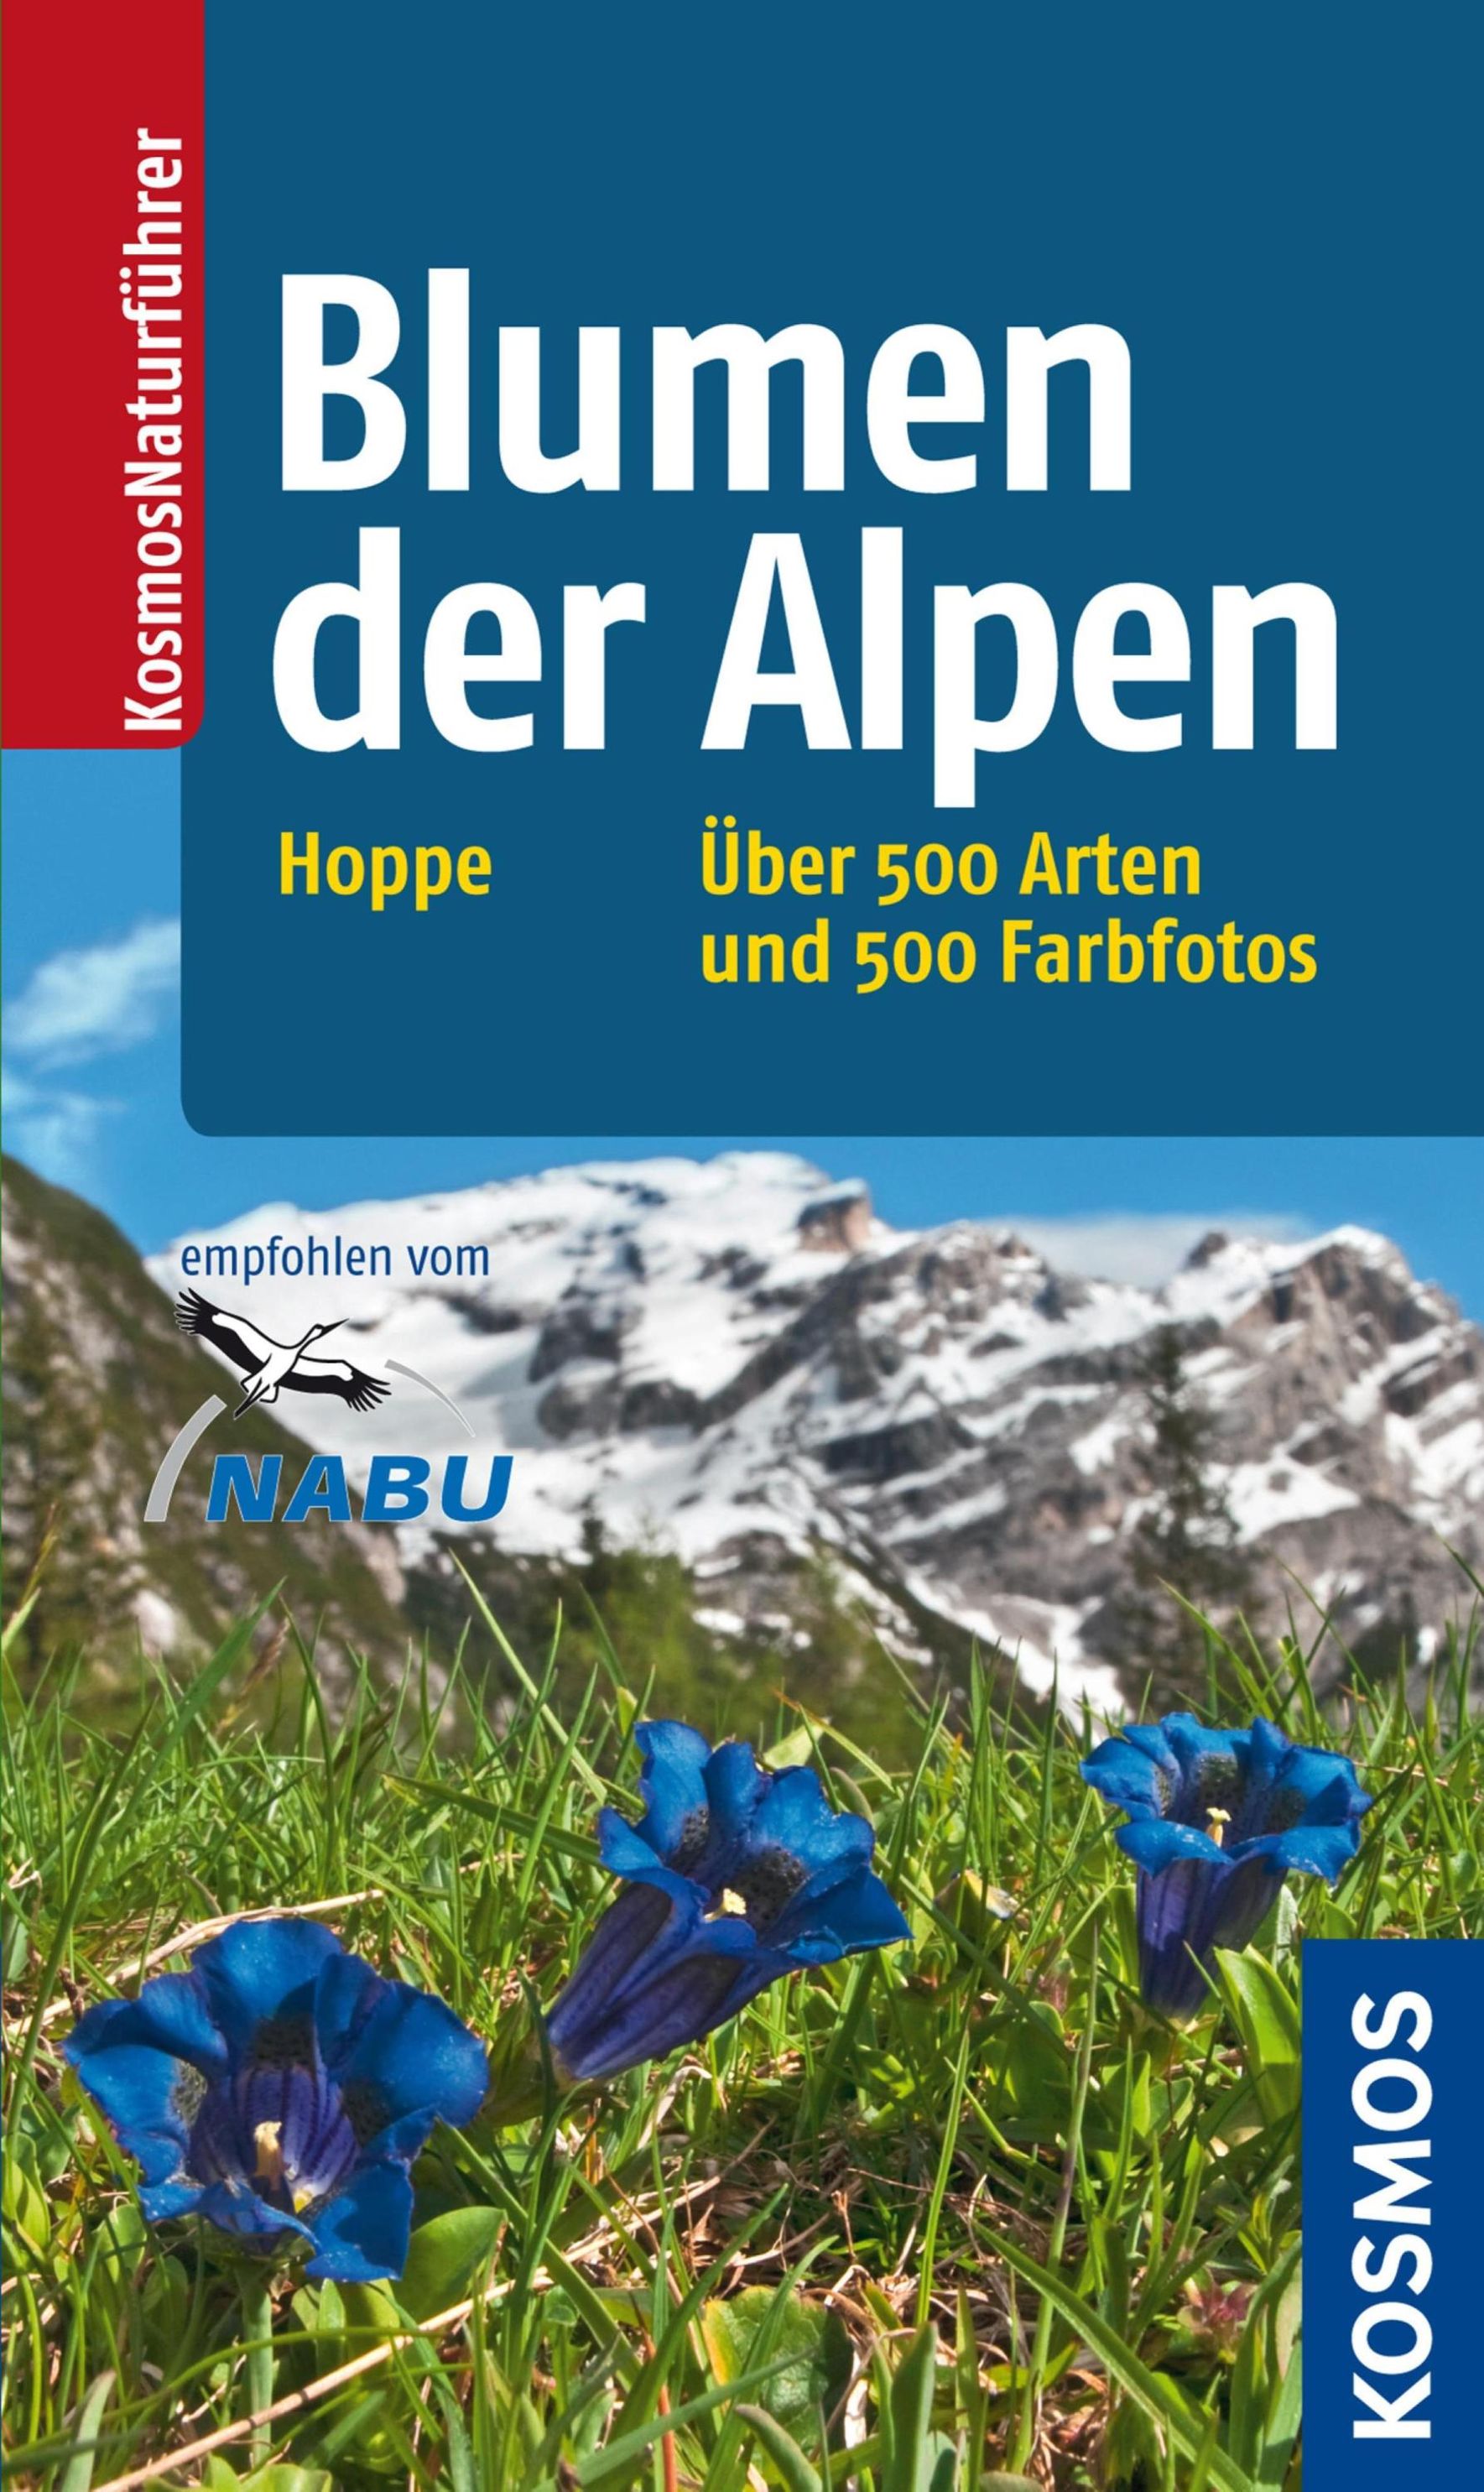 Blumen der Alpen Kosmos-Naturführer eBook v. Ansgar Hoppe | Weltbild